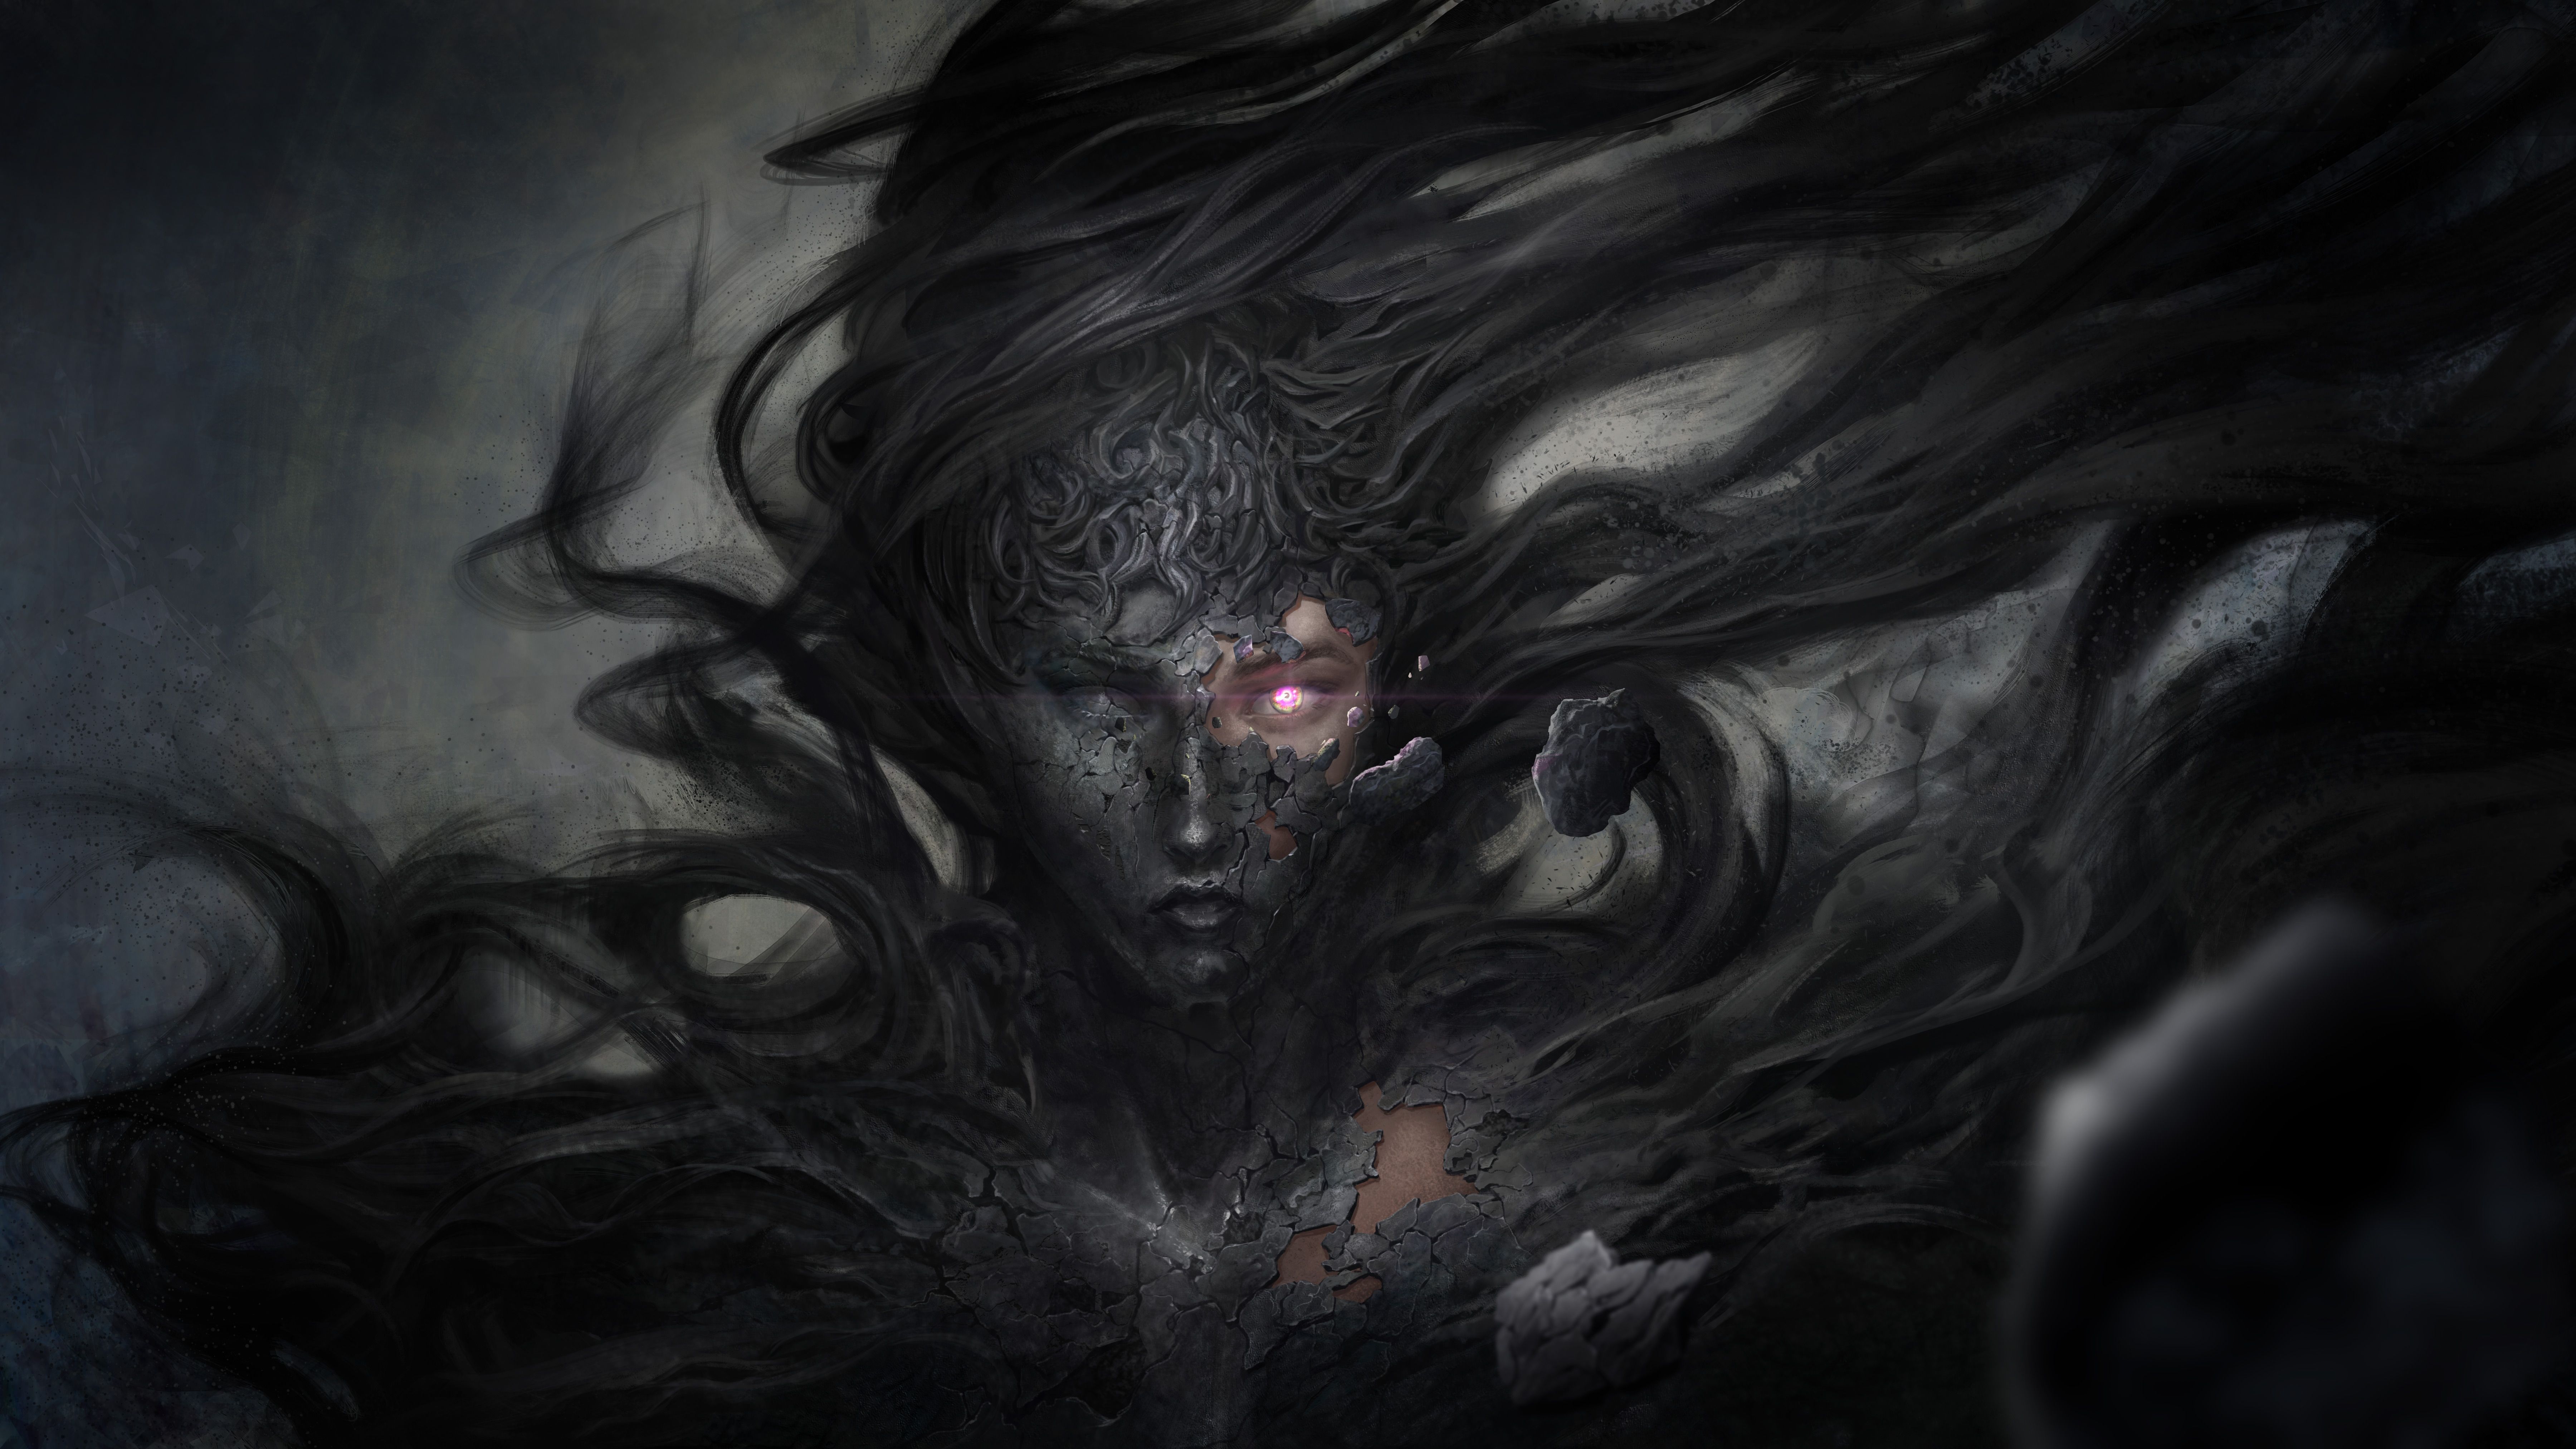 Dark Demon Fantasy Witch 8k, HD Artist, 4k Wallpaper, Image, Background, Photo and Picture